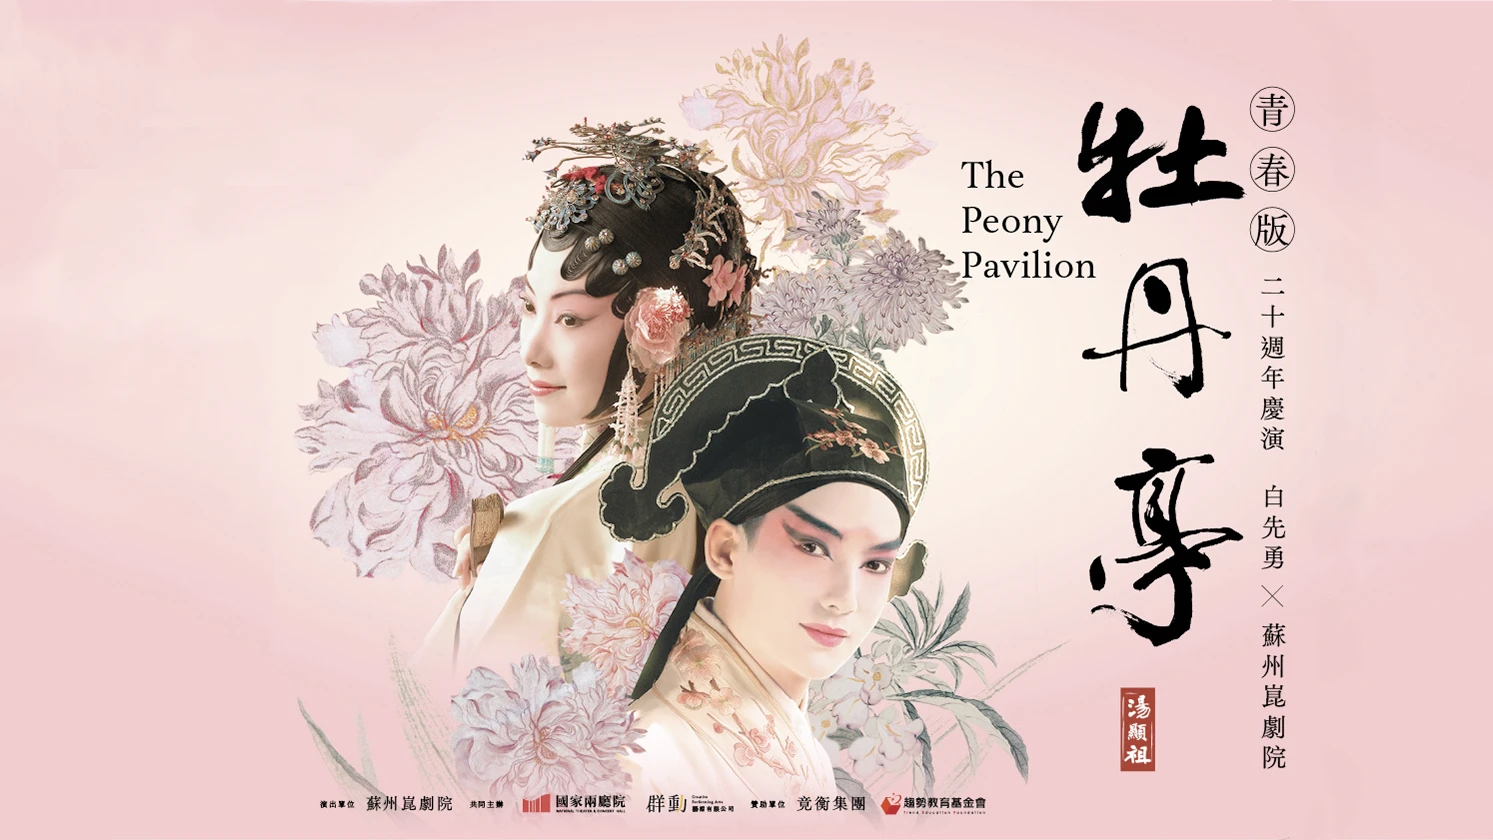 青春版《牡丹亭》二十週年慶演 The Peony Pavilion—The Youth Version by Pai Hsien-yung